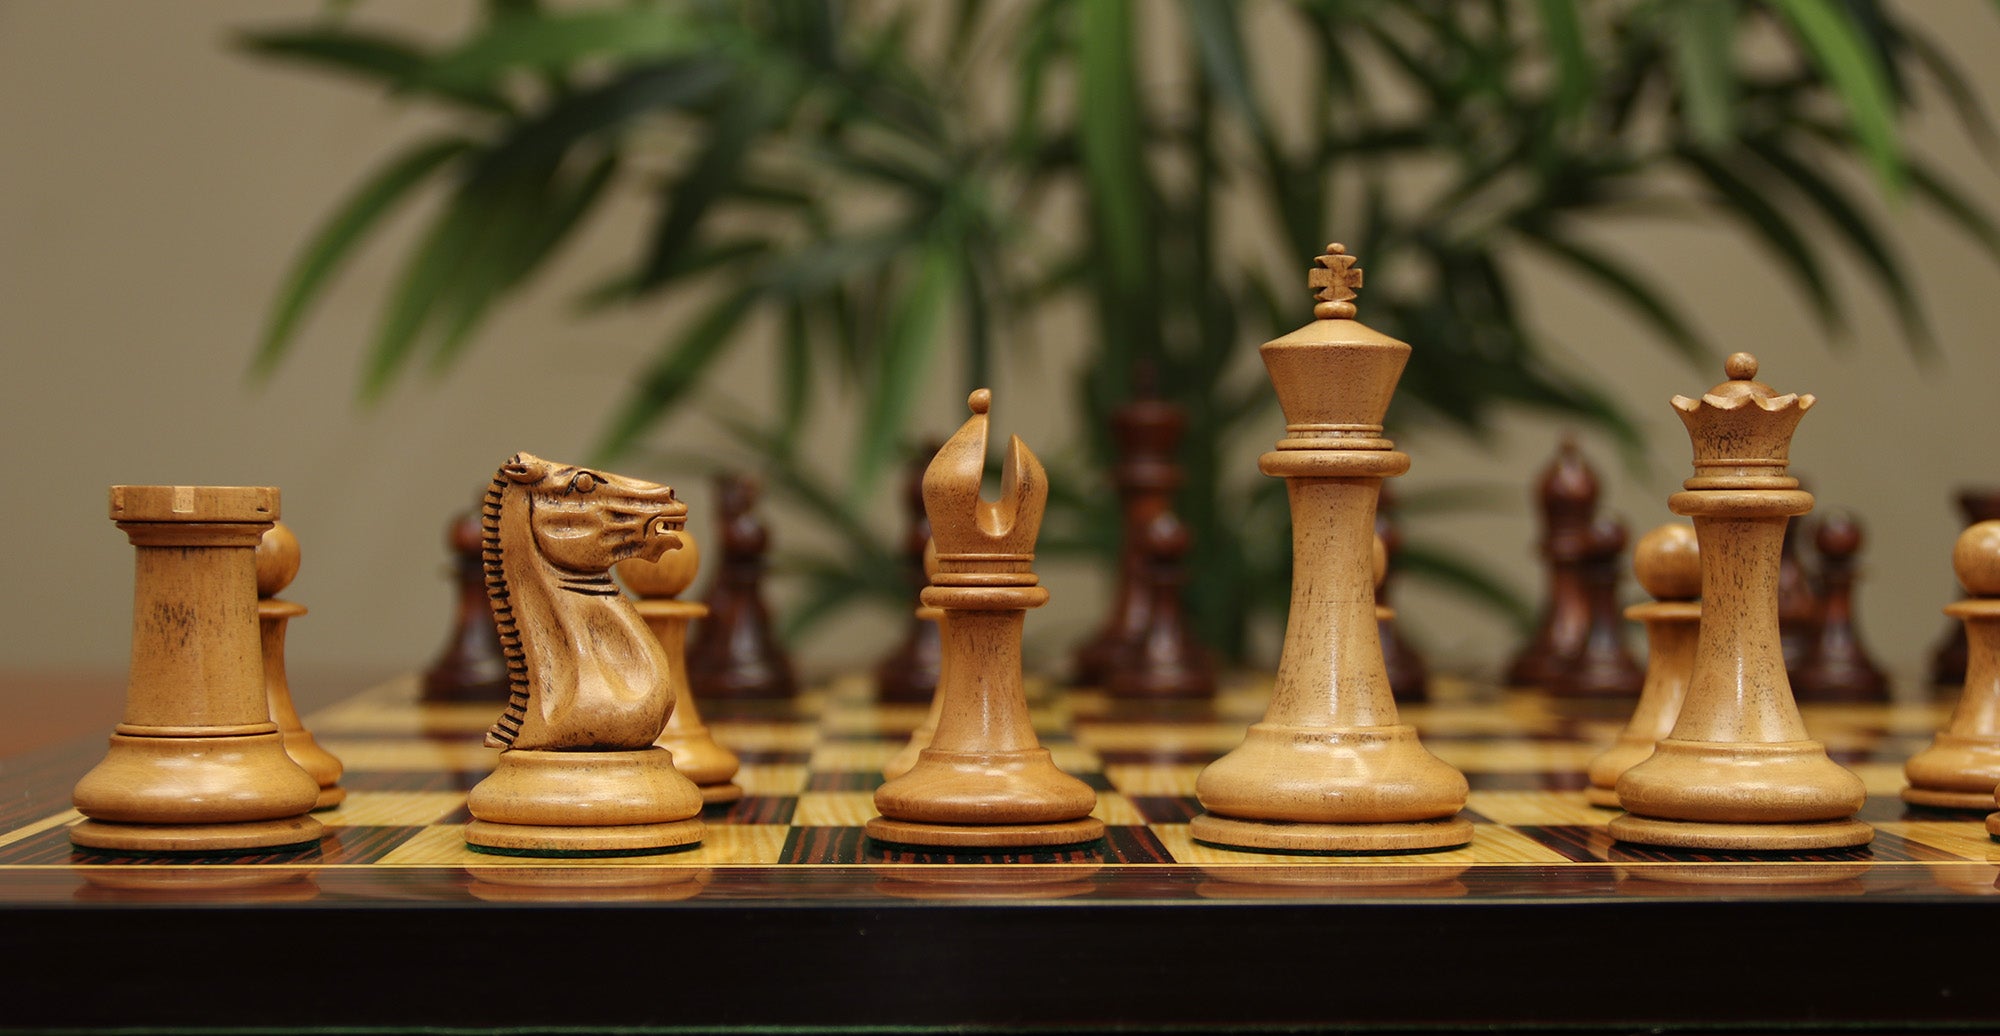 NATHANIEL COOKE SERIES 1849 Distressed/Mahogany Boxwood Chess Set King: 3.625"